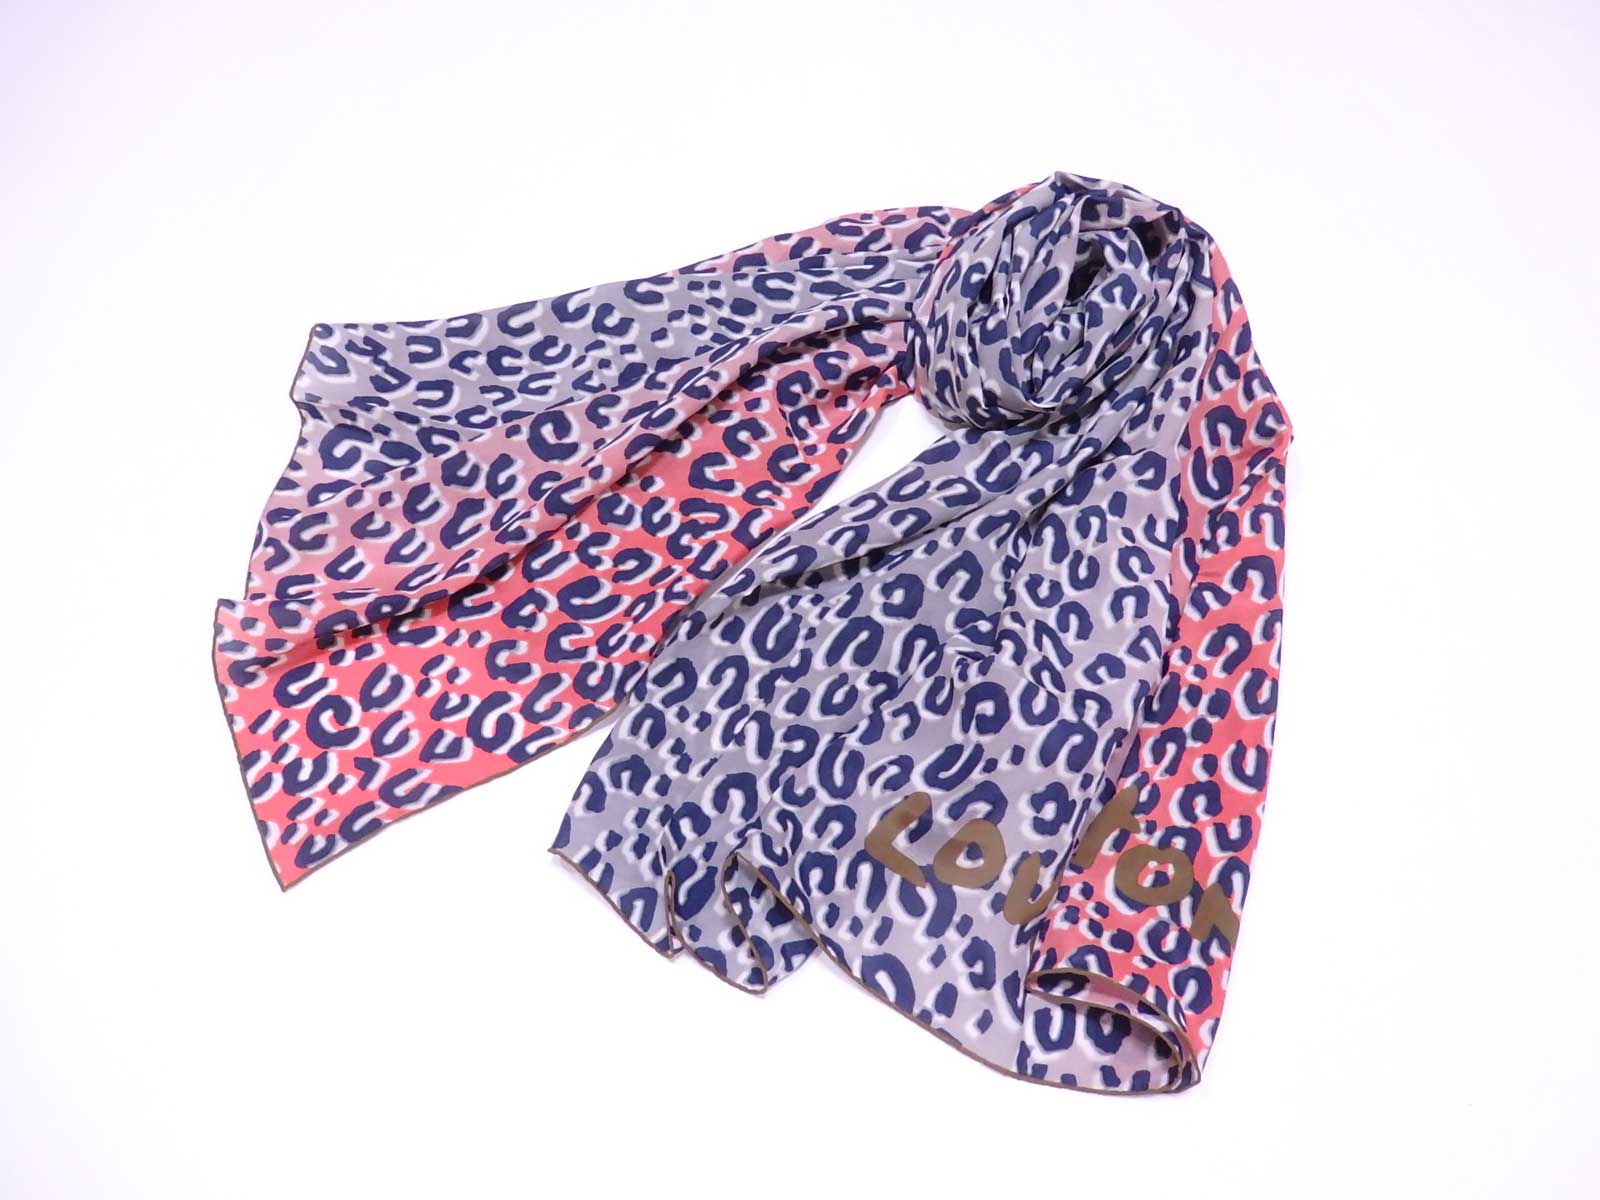 Auth Louis Vuitton Leopard Batik Scarf Shawl Blue/Pink 100% Silk - e39854 | eBay